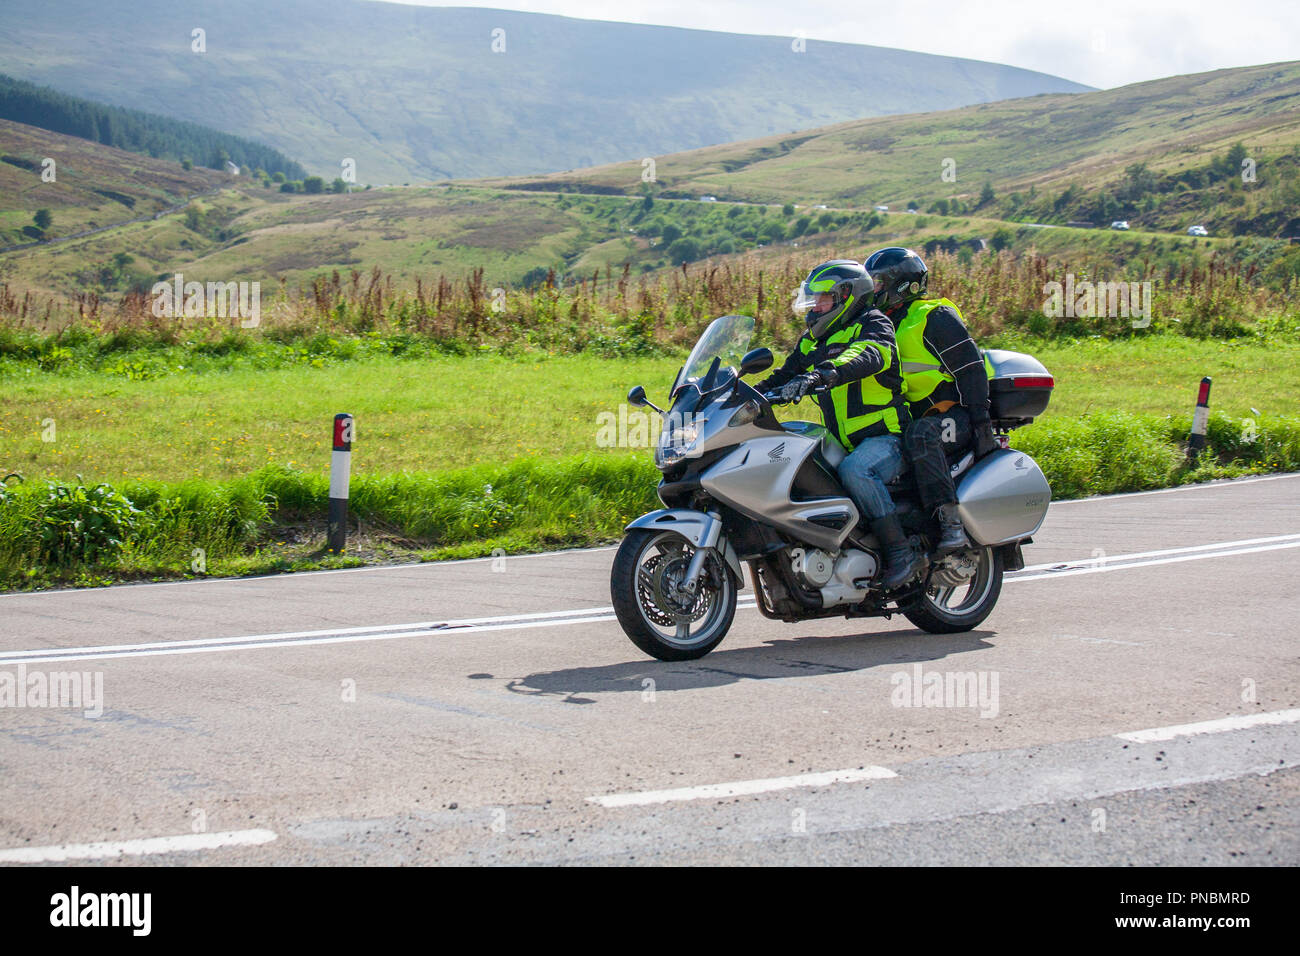 Superbike on Mountain Road Stock Photo